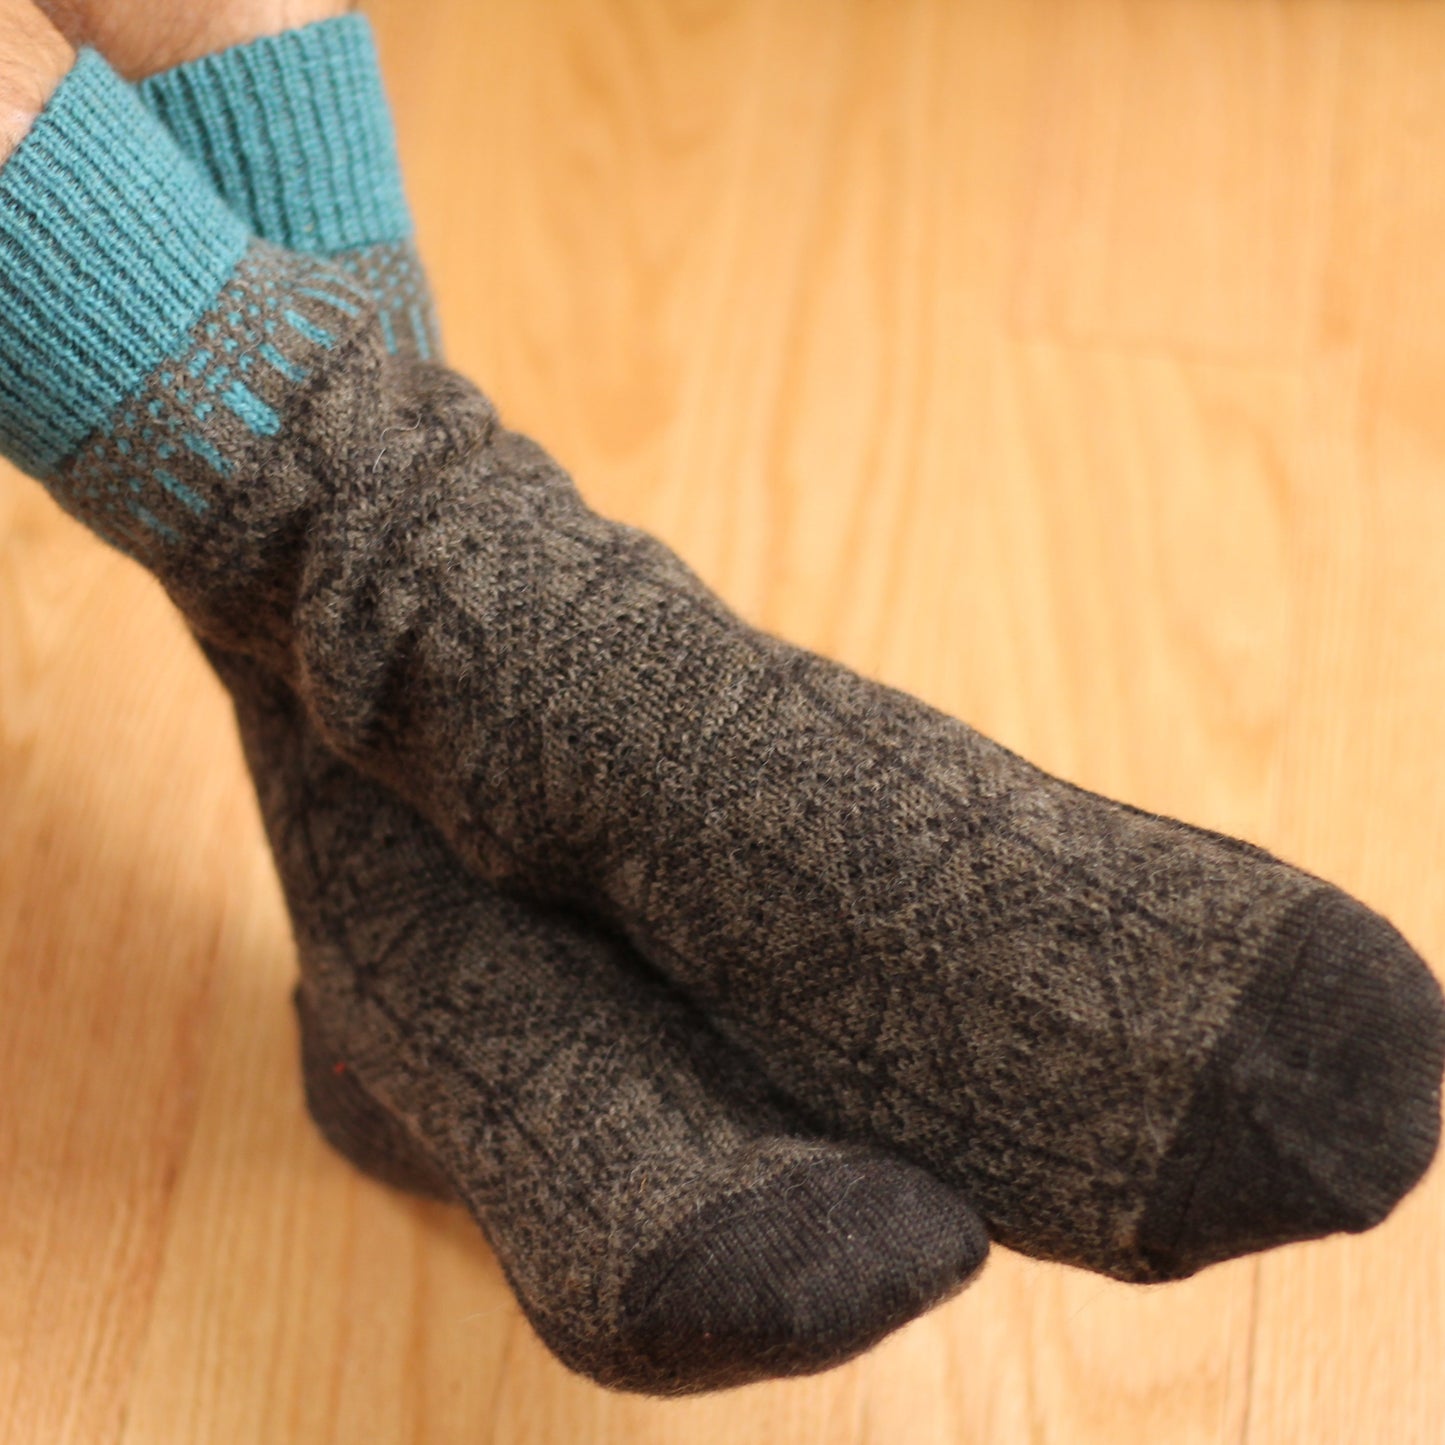 Hirsch Natur Unisex Hiking Sock - Merino Wool – Warmth and Weather